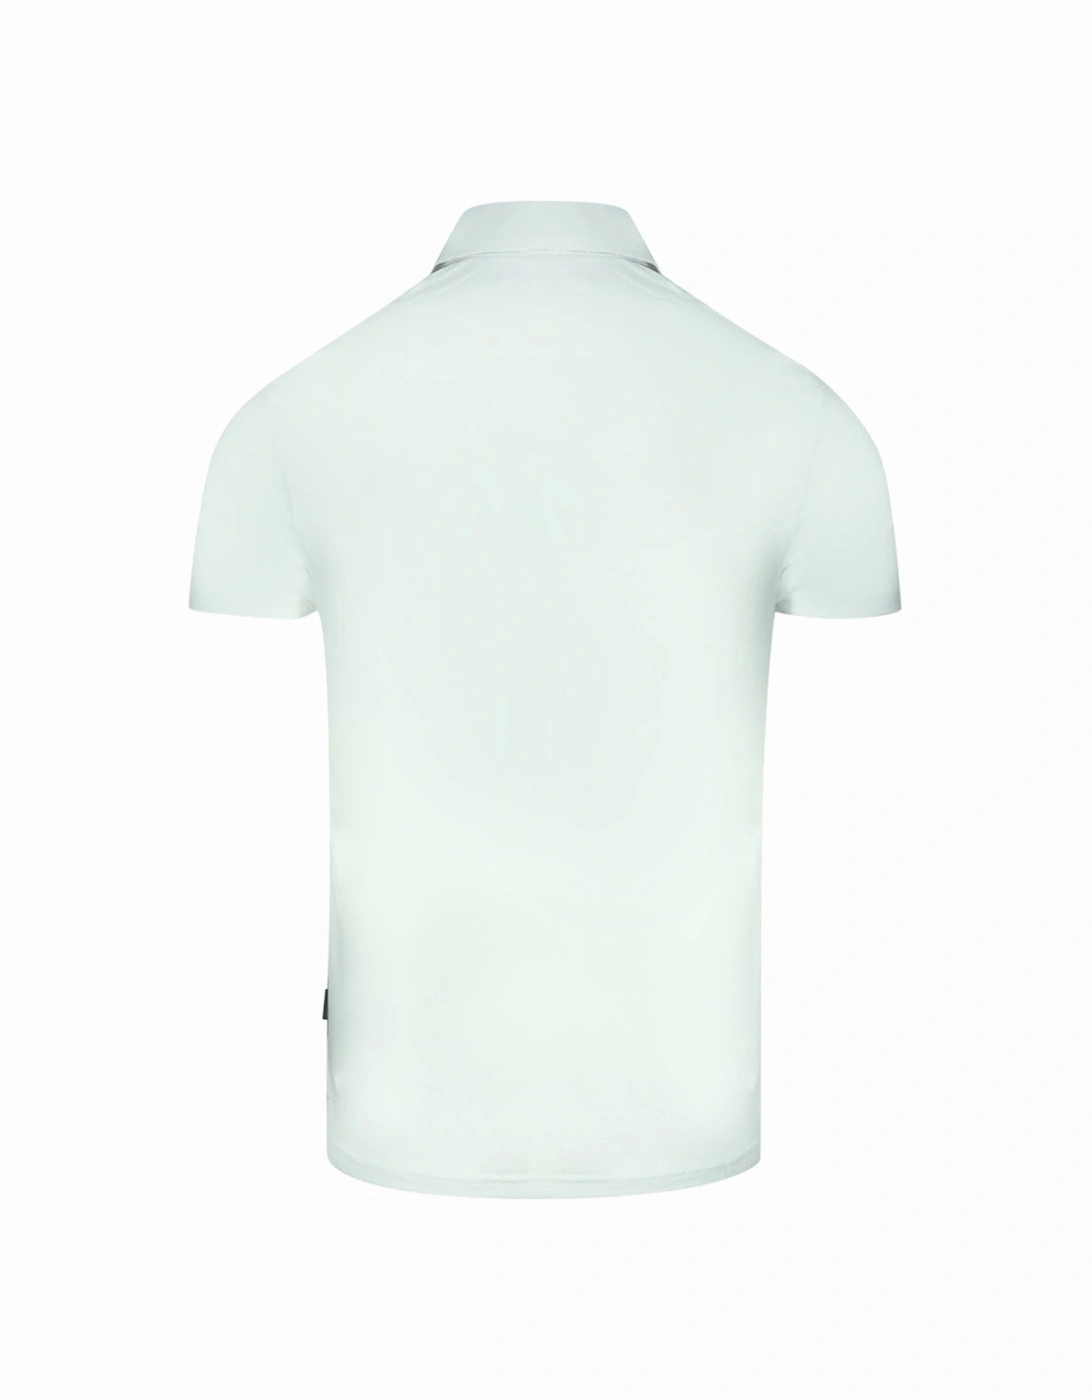 Aldis Crest Block Logo White Polo Shirt